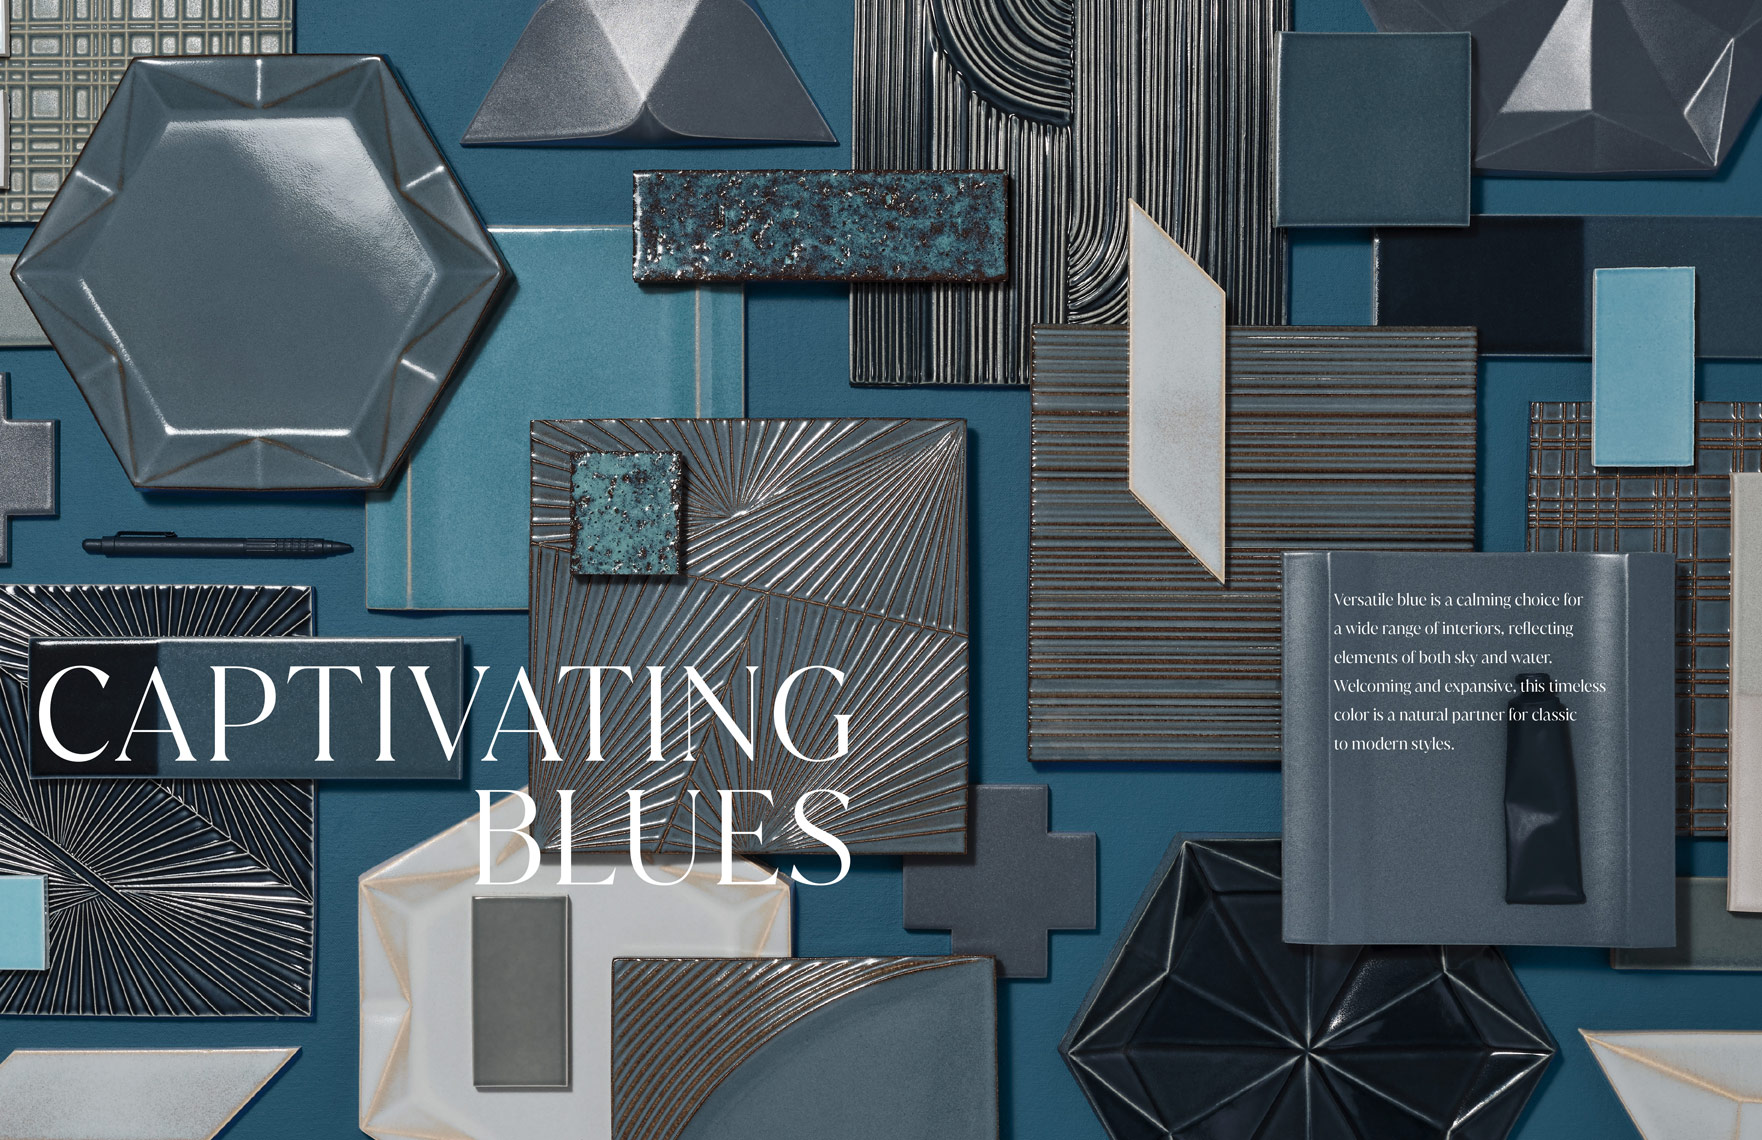 Ann Sacks Tile captivating blues tile collection